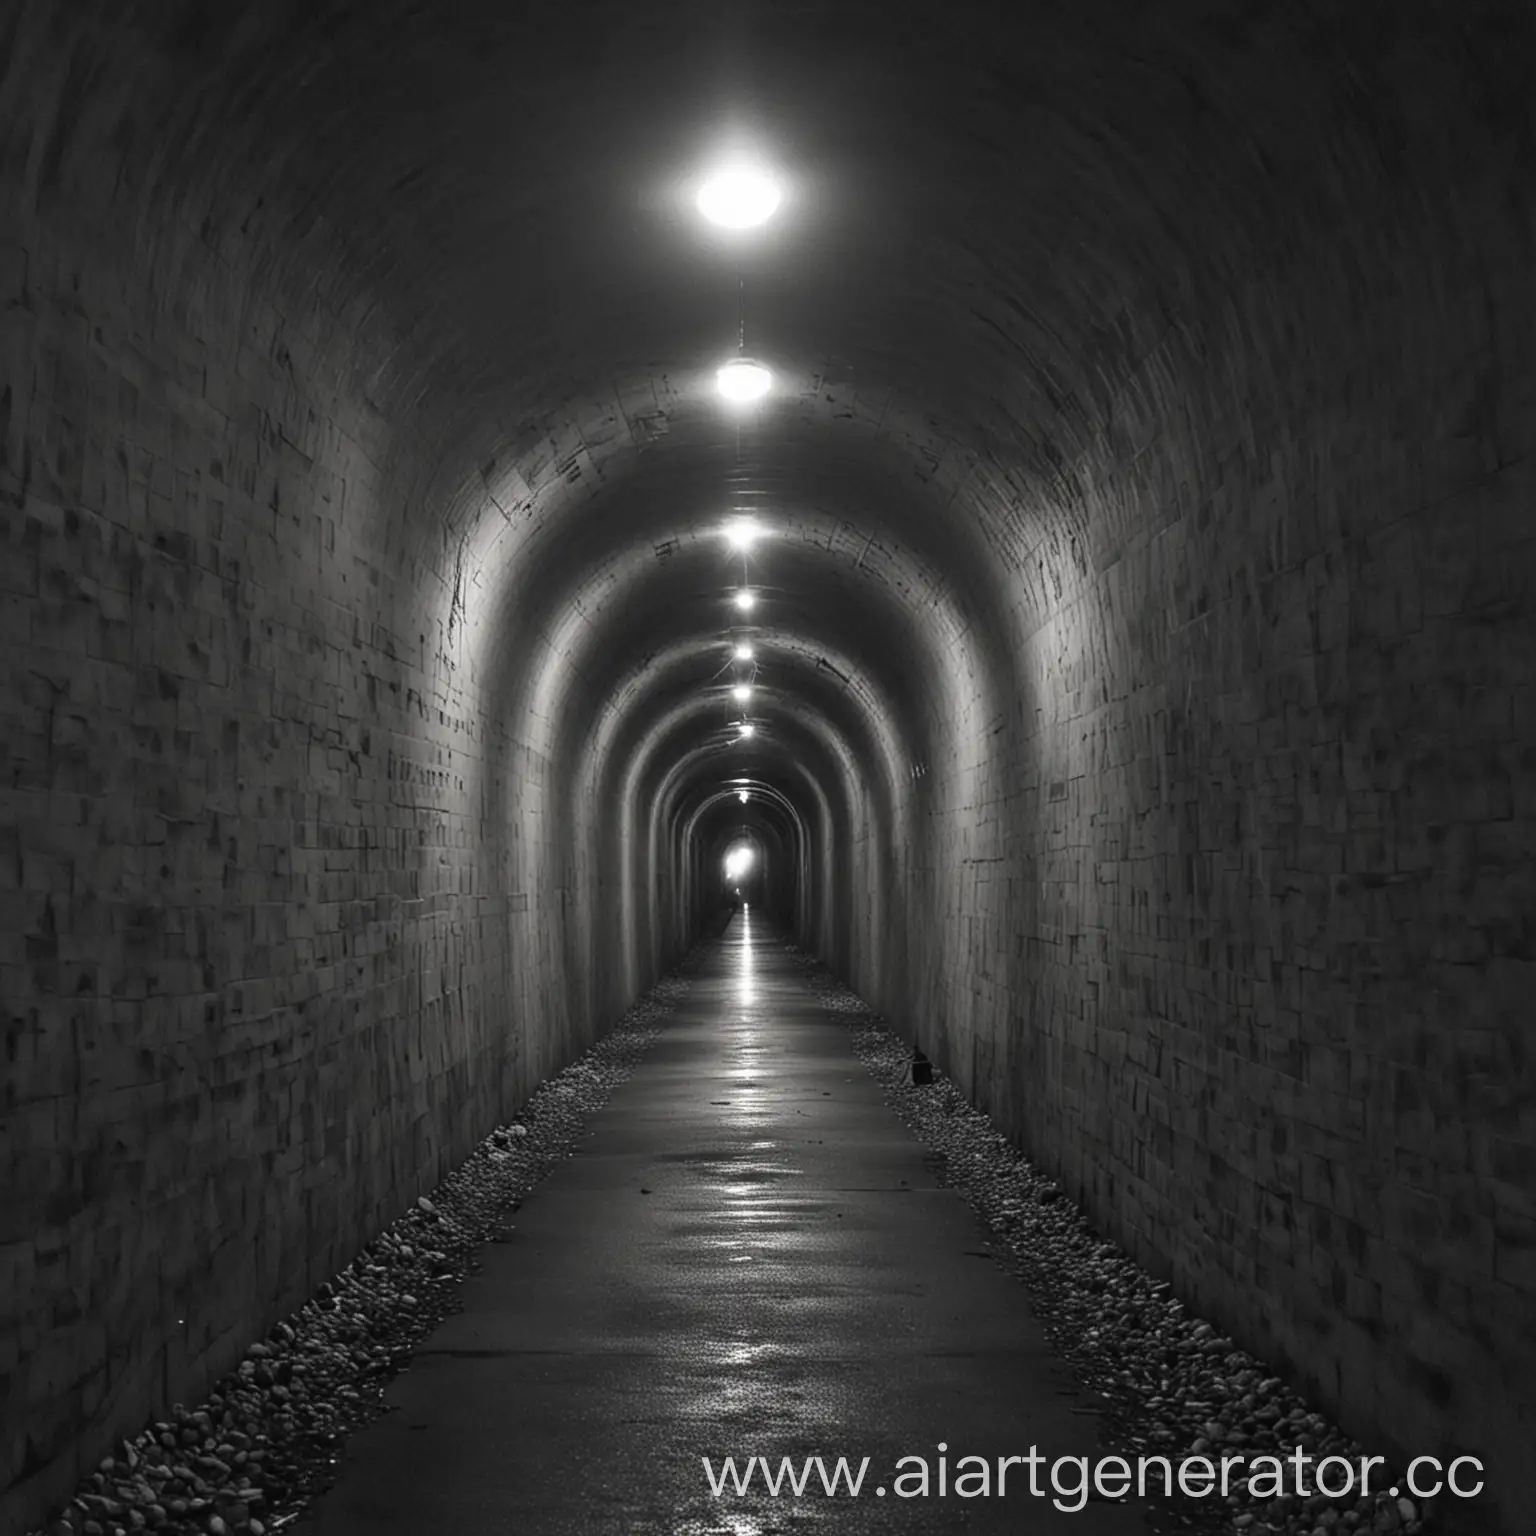 Hopeful-Light-at-the-End-of-the-Tunnel-Illuminating-Dark-Passage